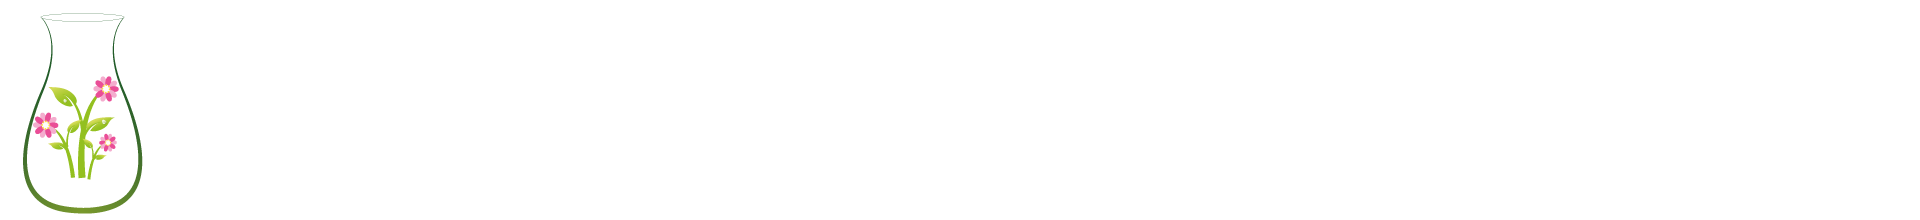 invitrolab.fr. La culture in vitro de plantes accessible à tous